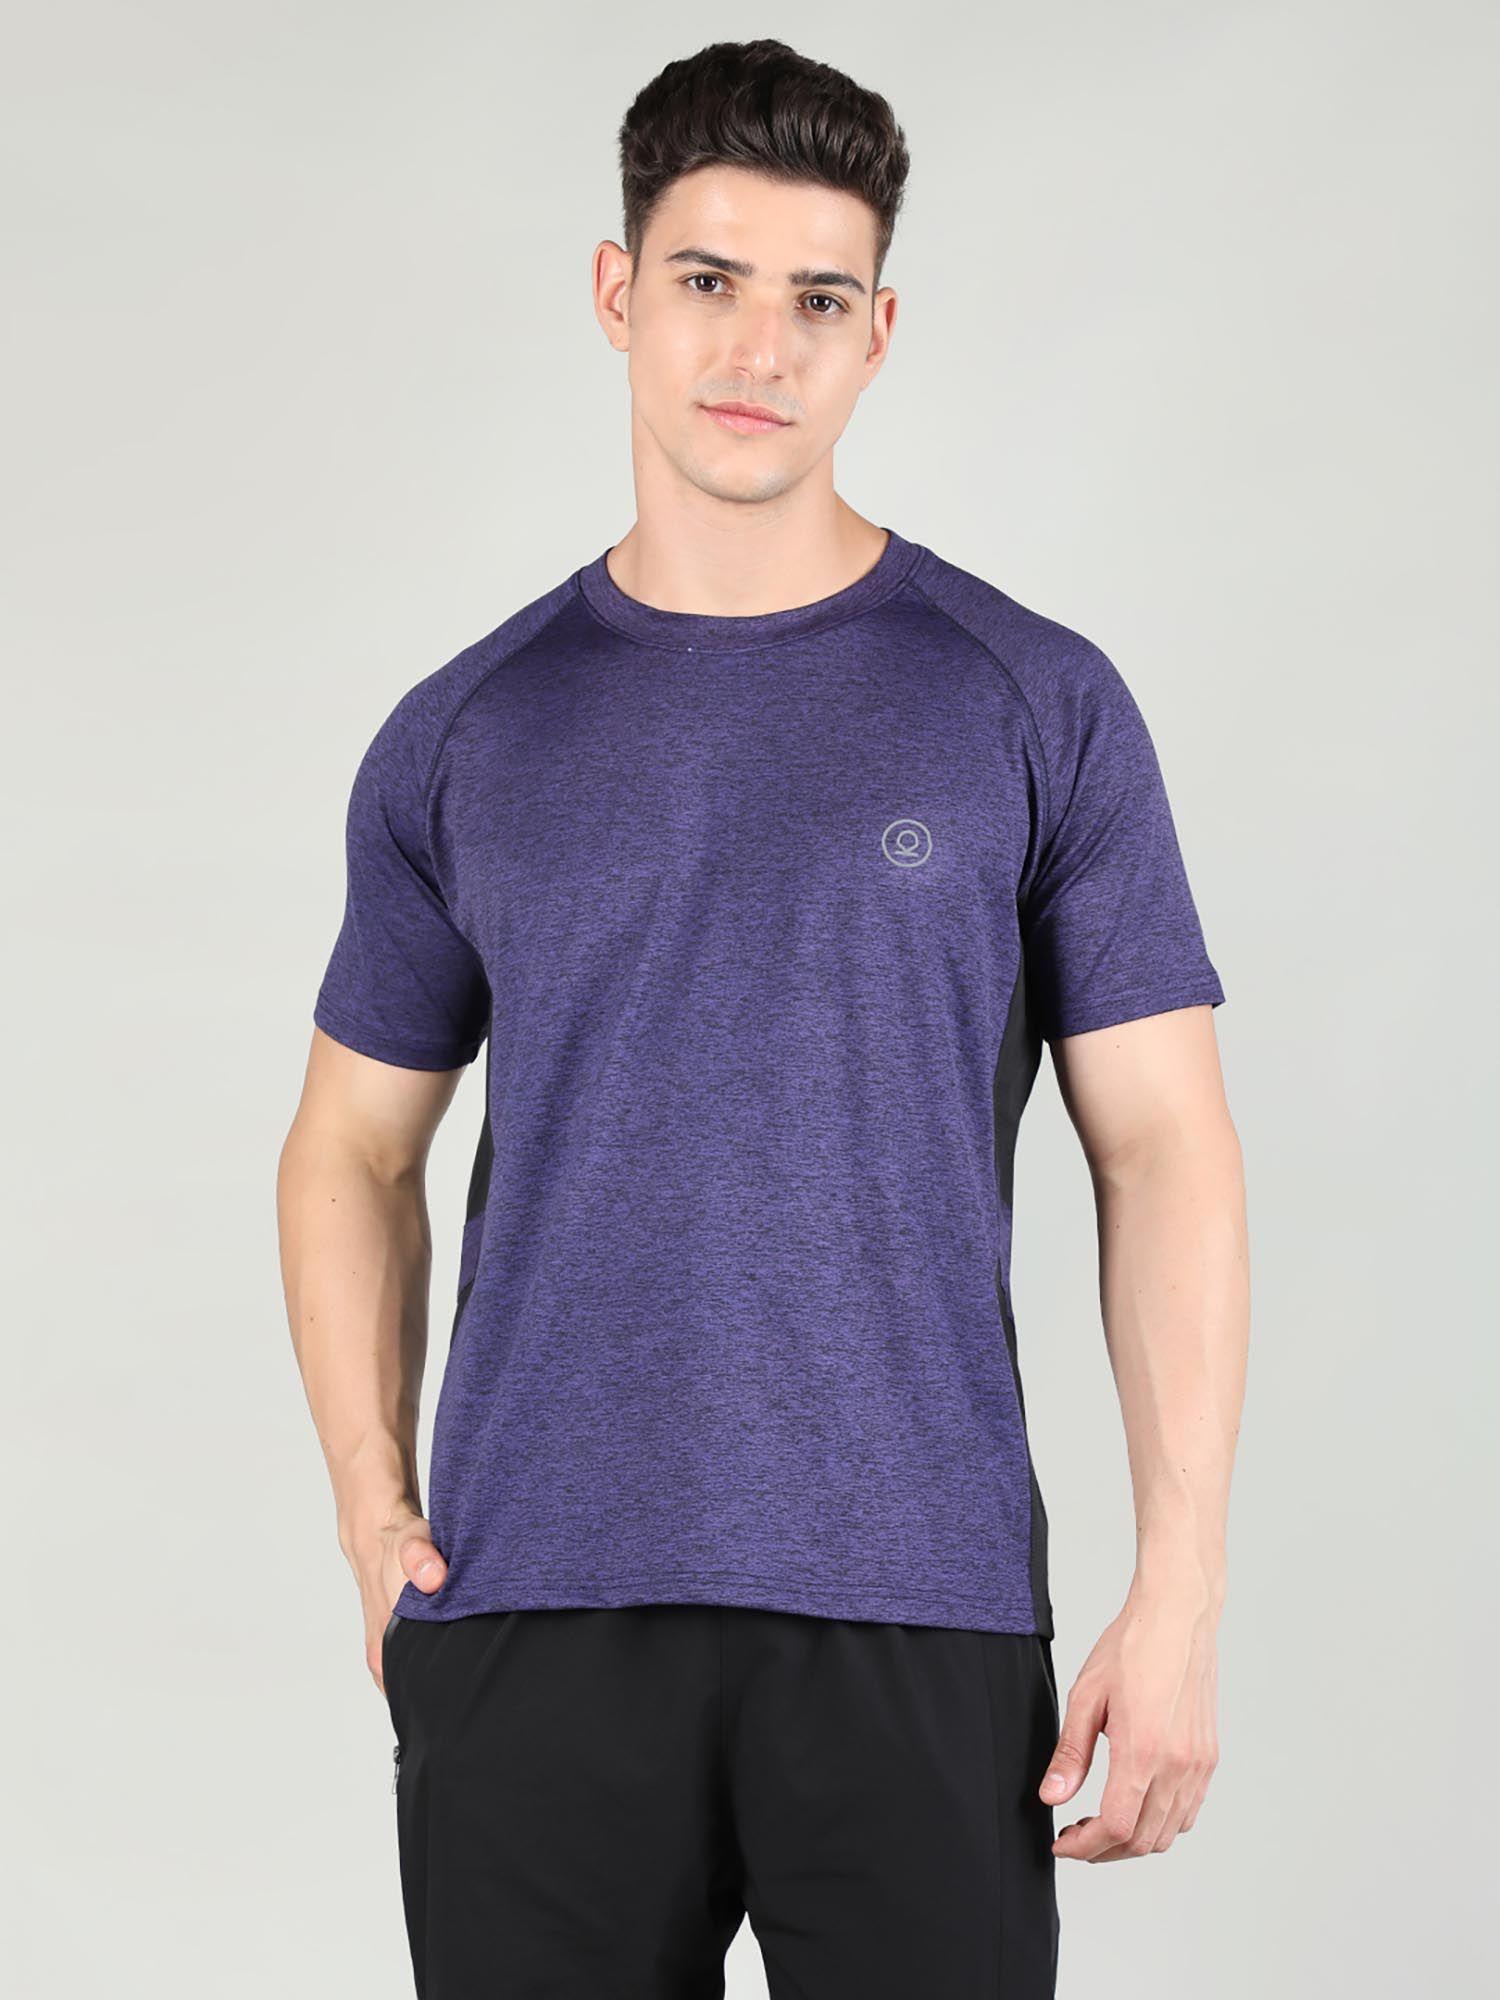 mens-round-neck-purple-sports-t-shirt